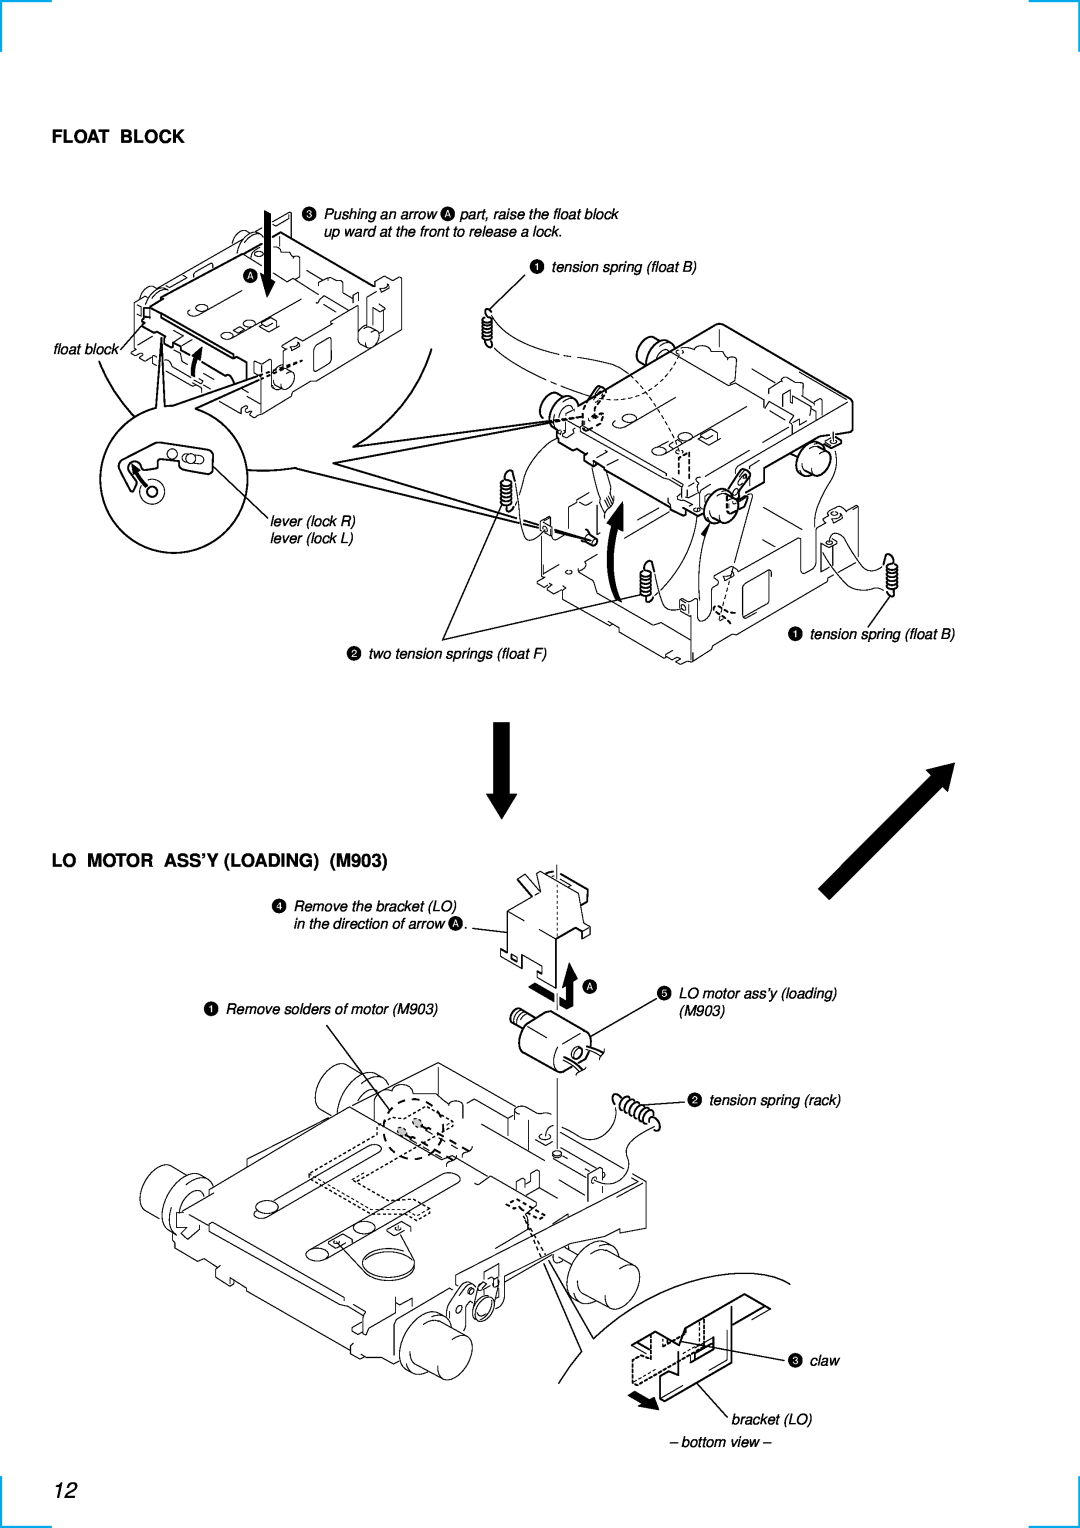 Sony MDX-C6500RV service manual Float Block, LO MOTOR ASS’Y LOADING M903, tension spring float B, LO motor ass’y loading 